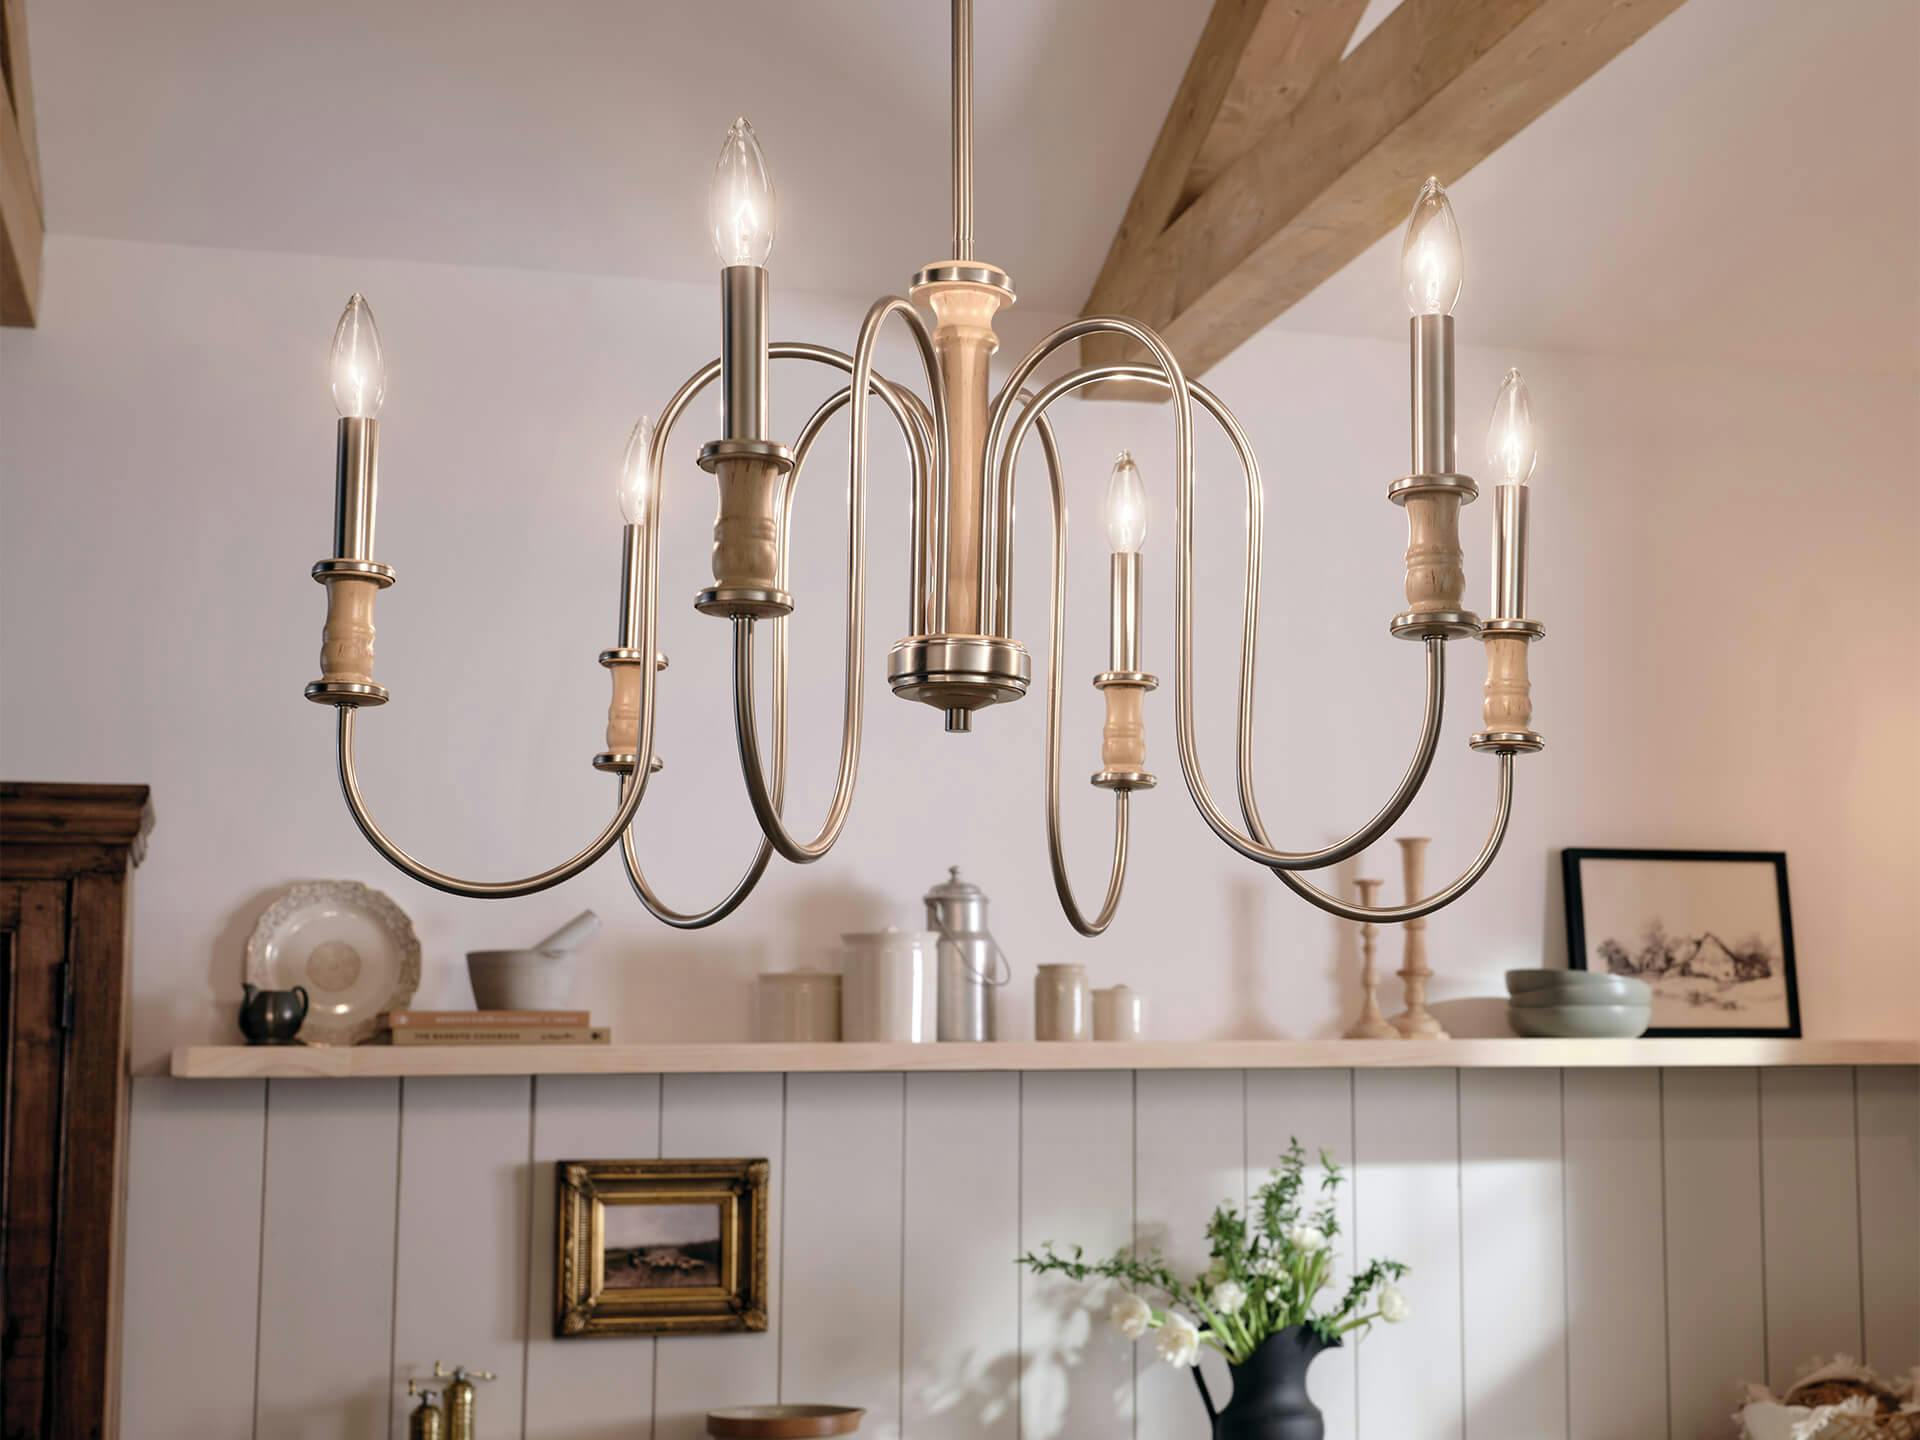 6 Light Karthe chandelier in a kitchen on in the daytime